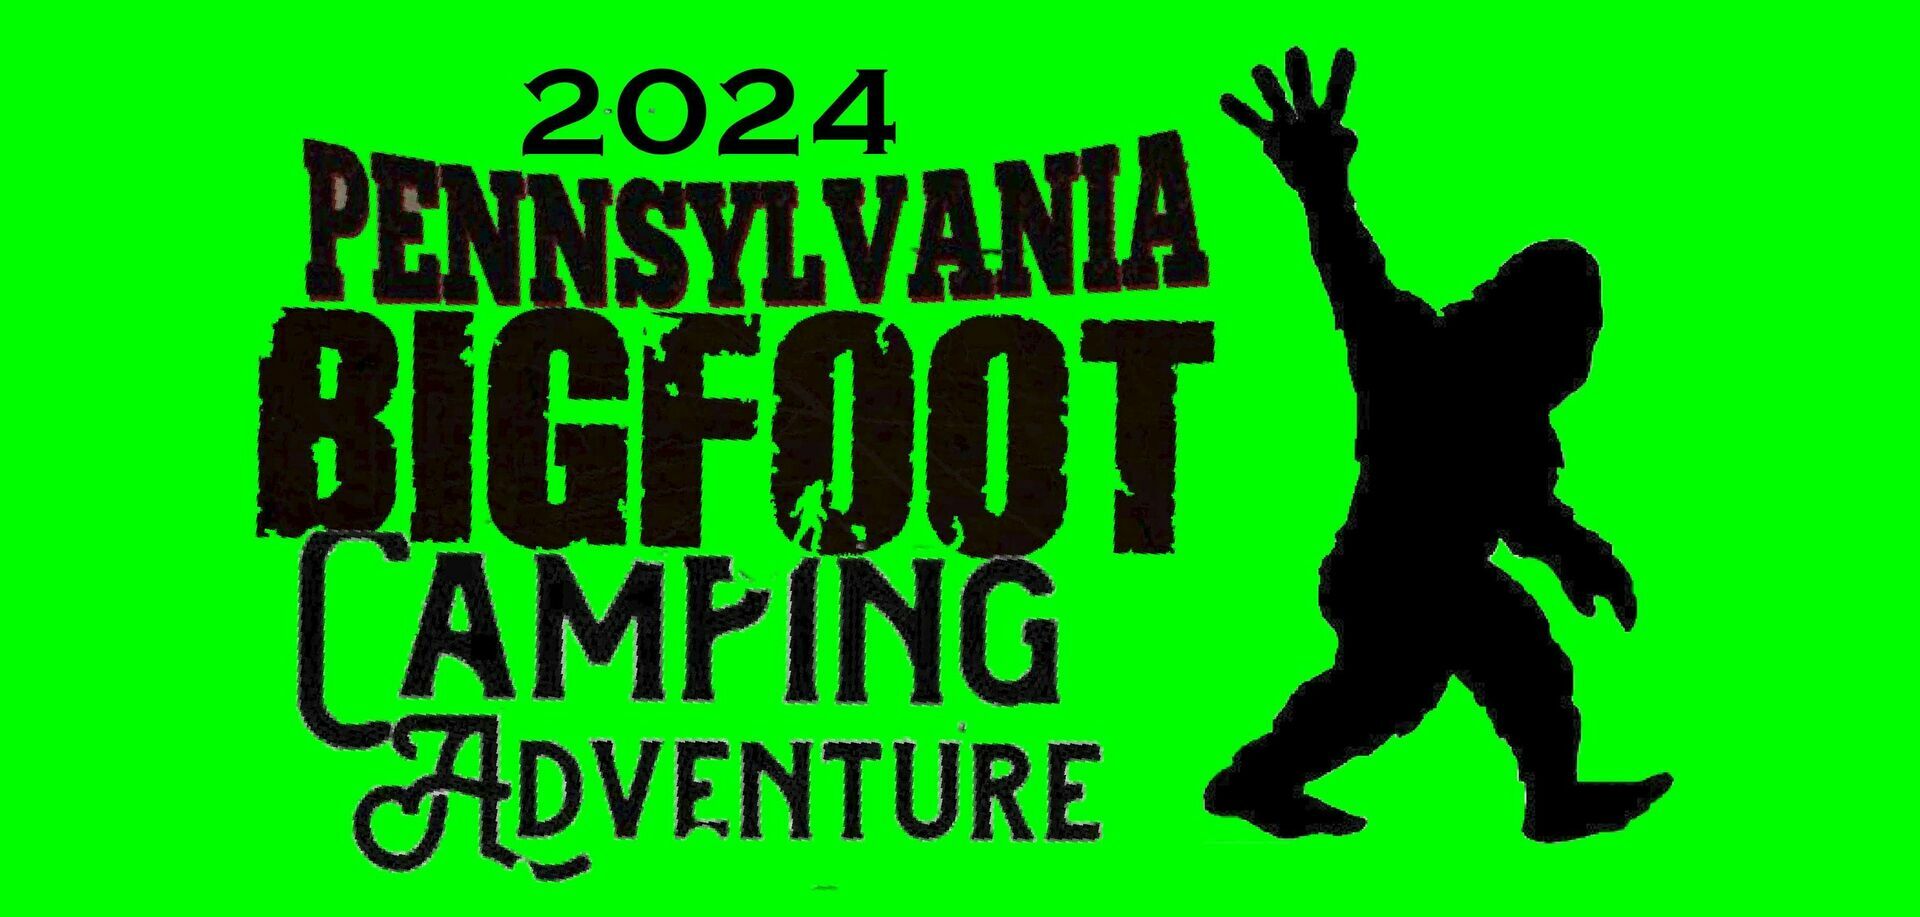 2024 Pennsylvania Bigfoot Camping Adventure, Farmington, Pennsylvania, United States